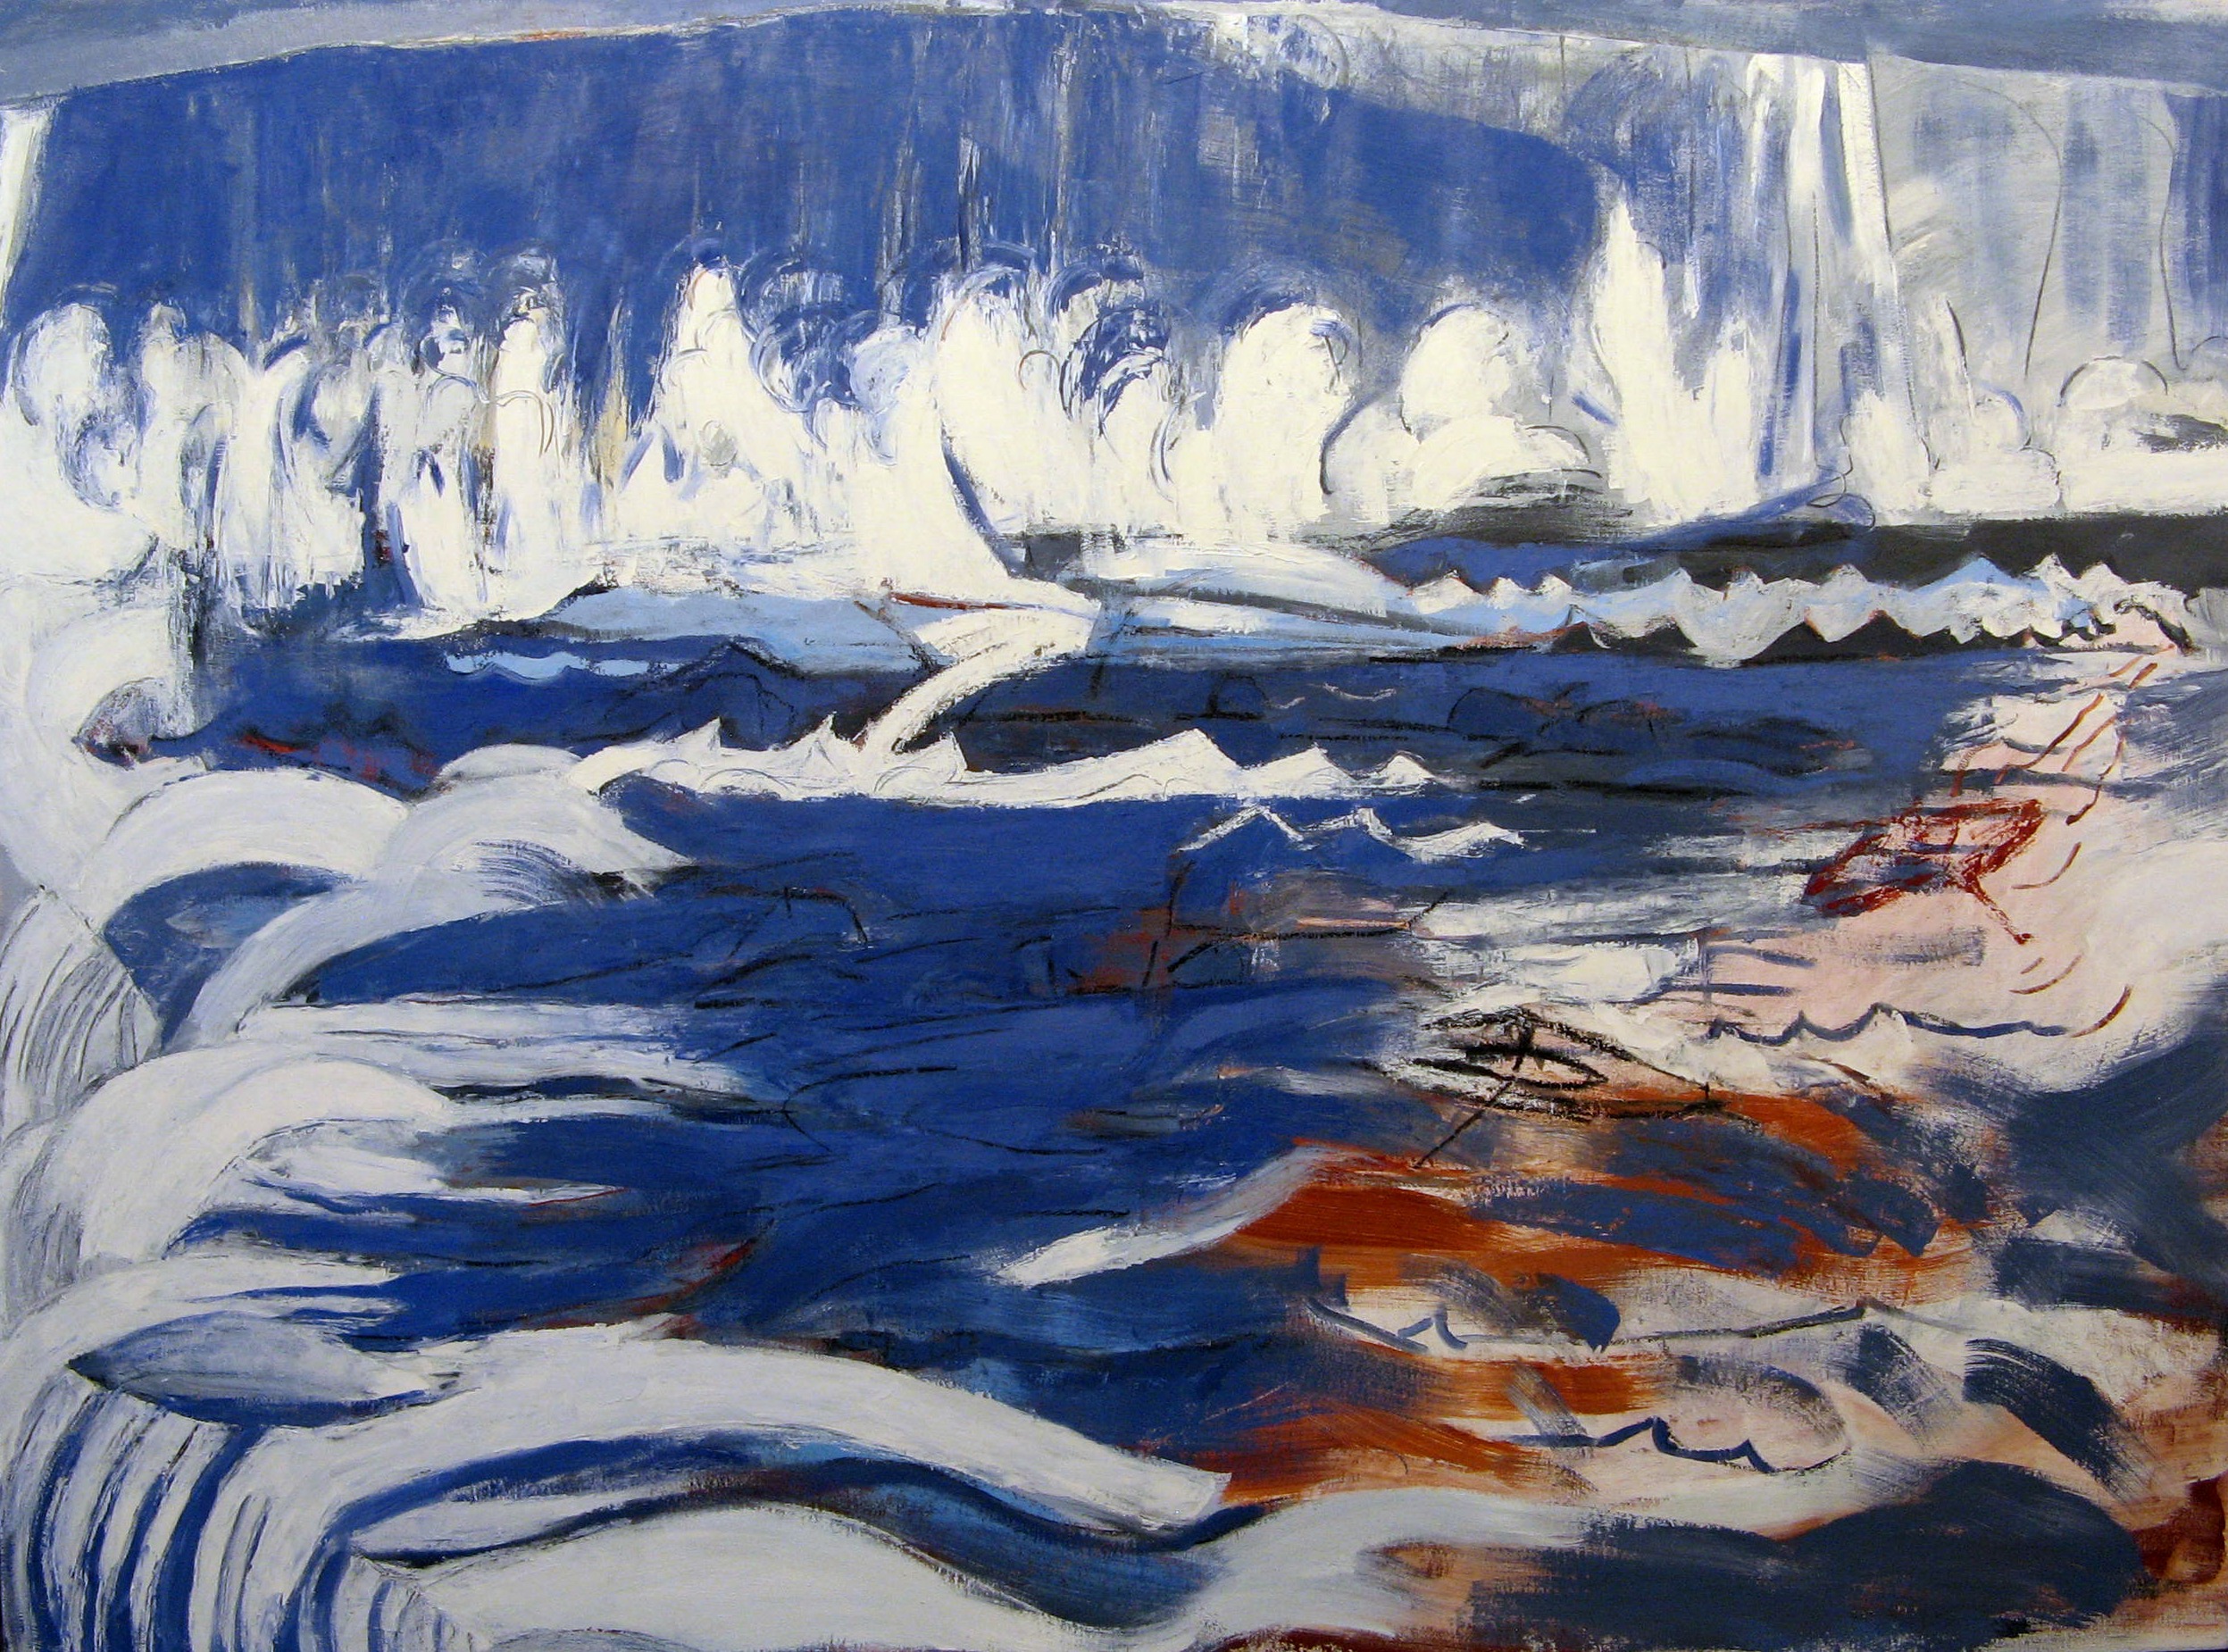  Osterman,  Falls  Oil on canvas, 42x56 